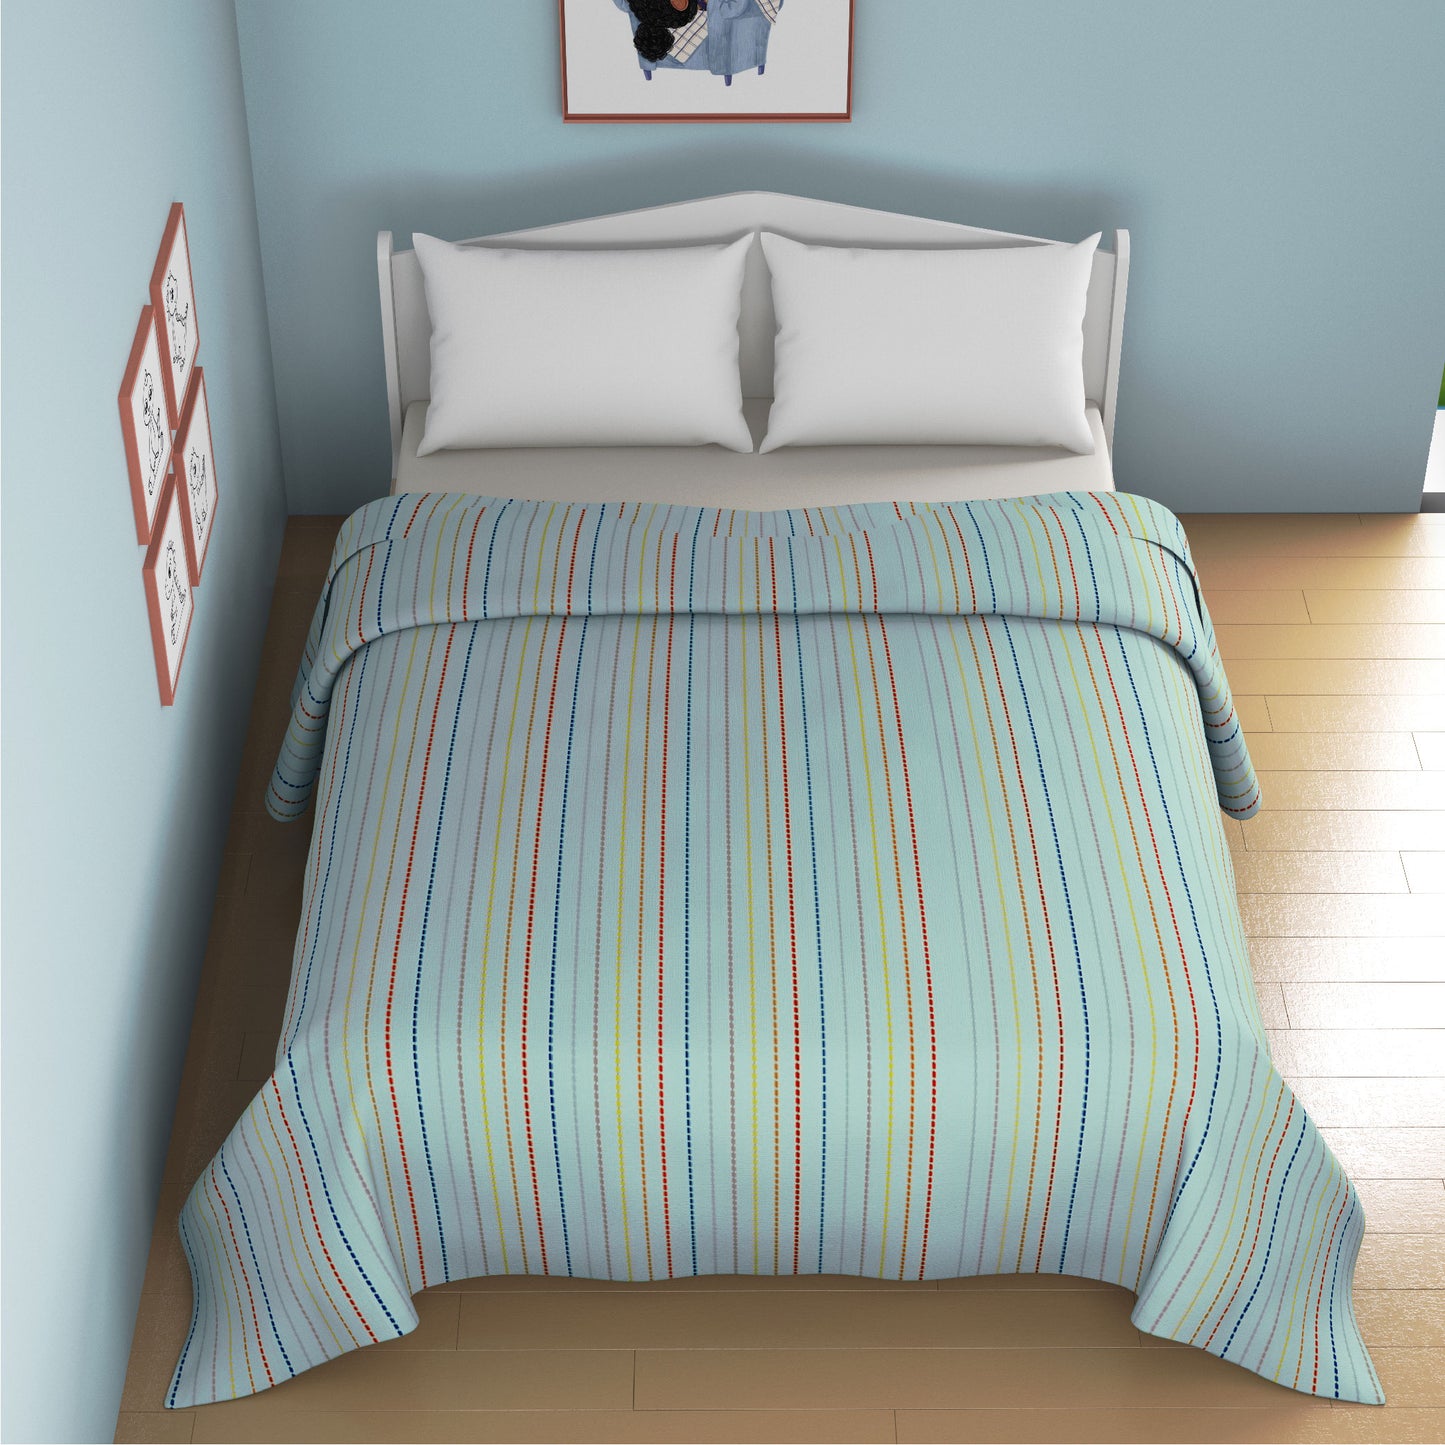 Cursive Lines Coverlet Queen Bed Size